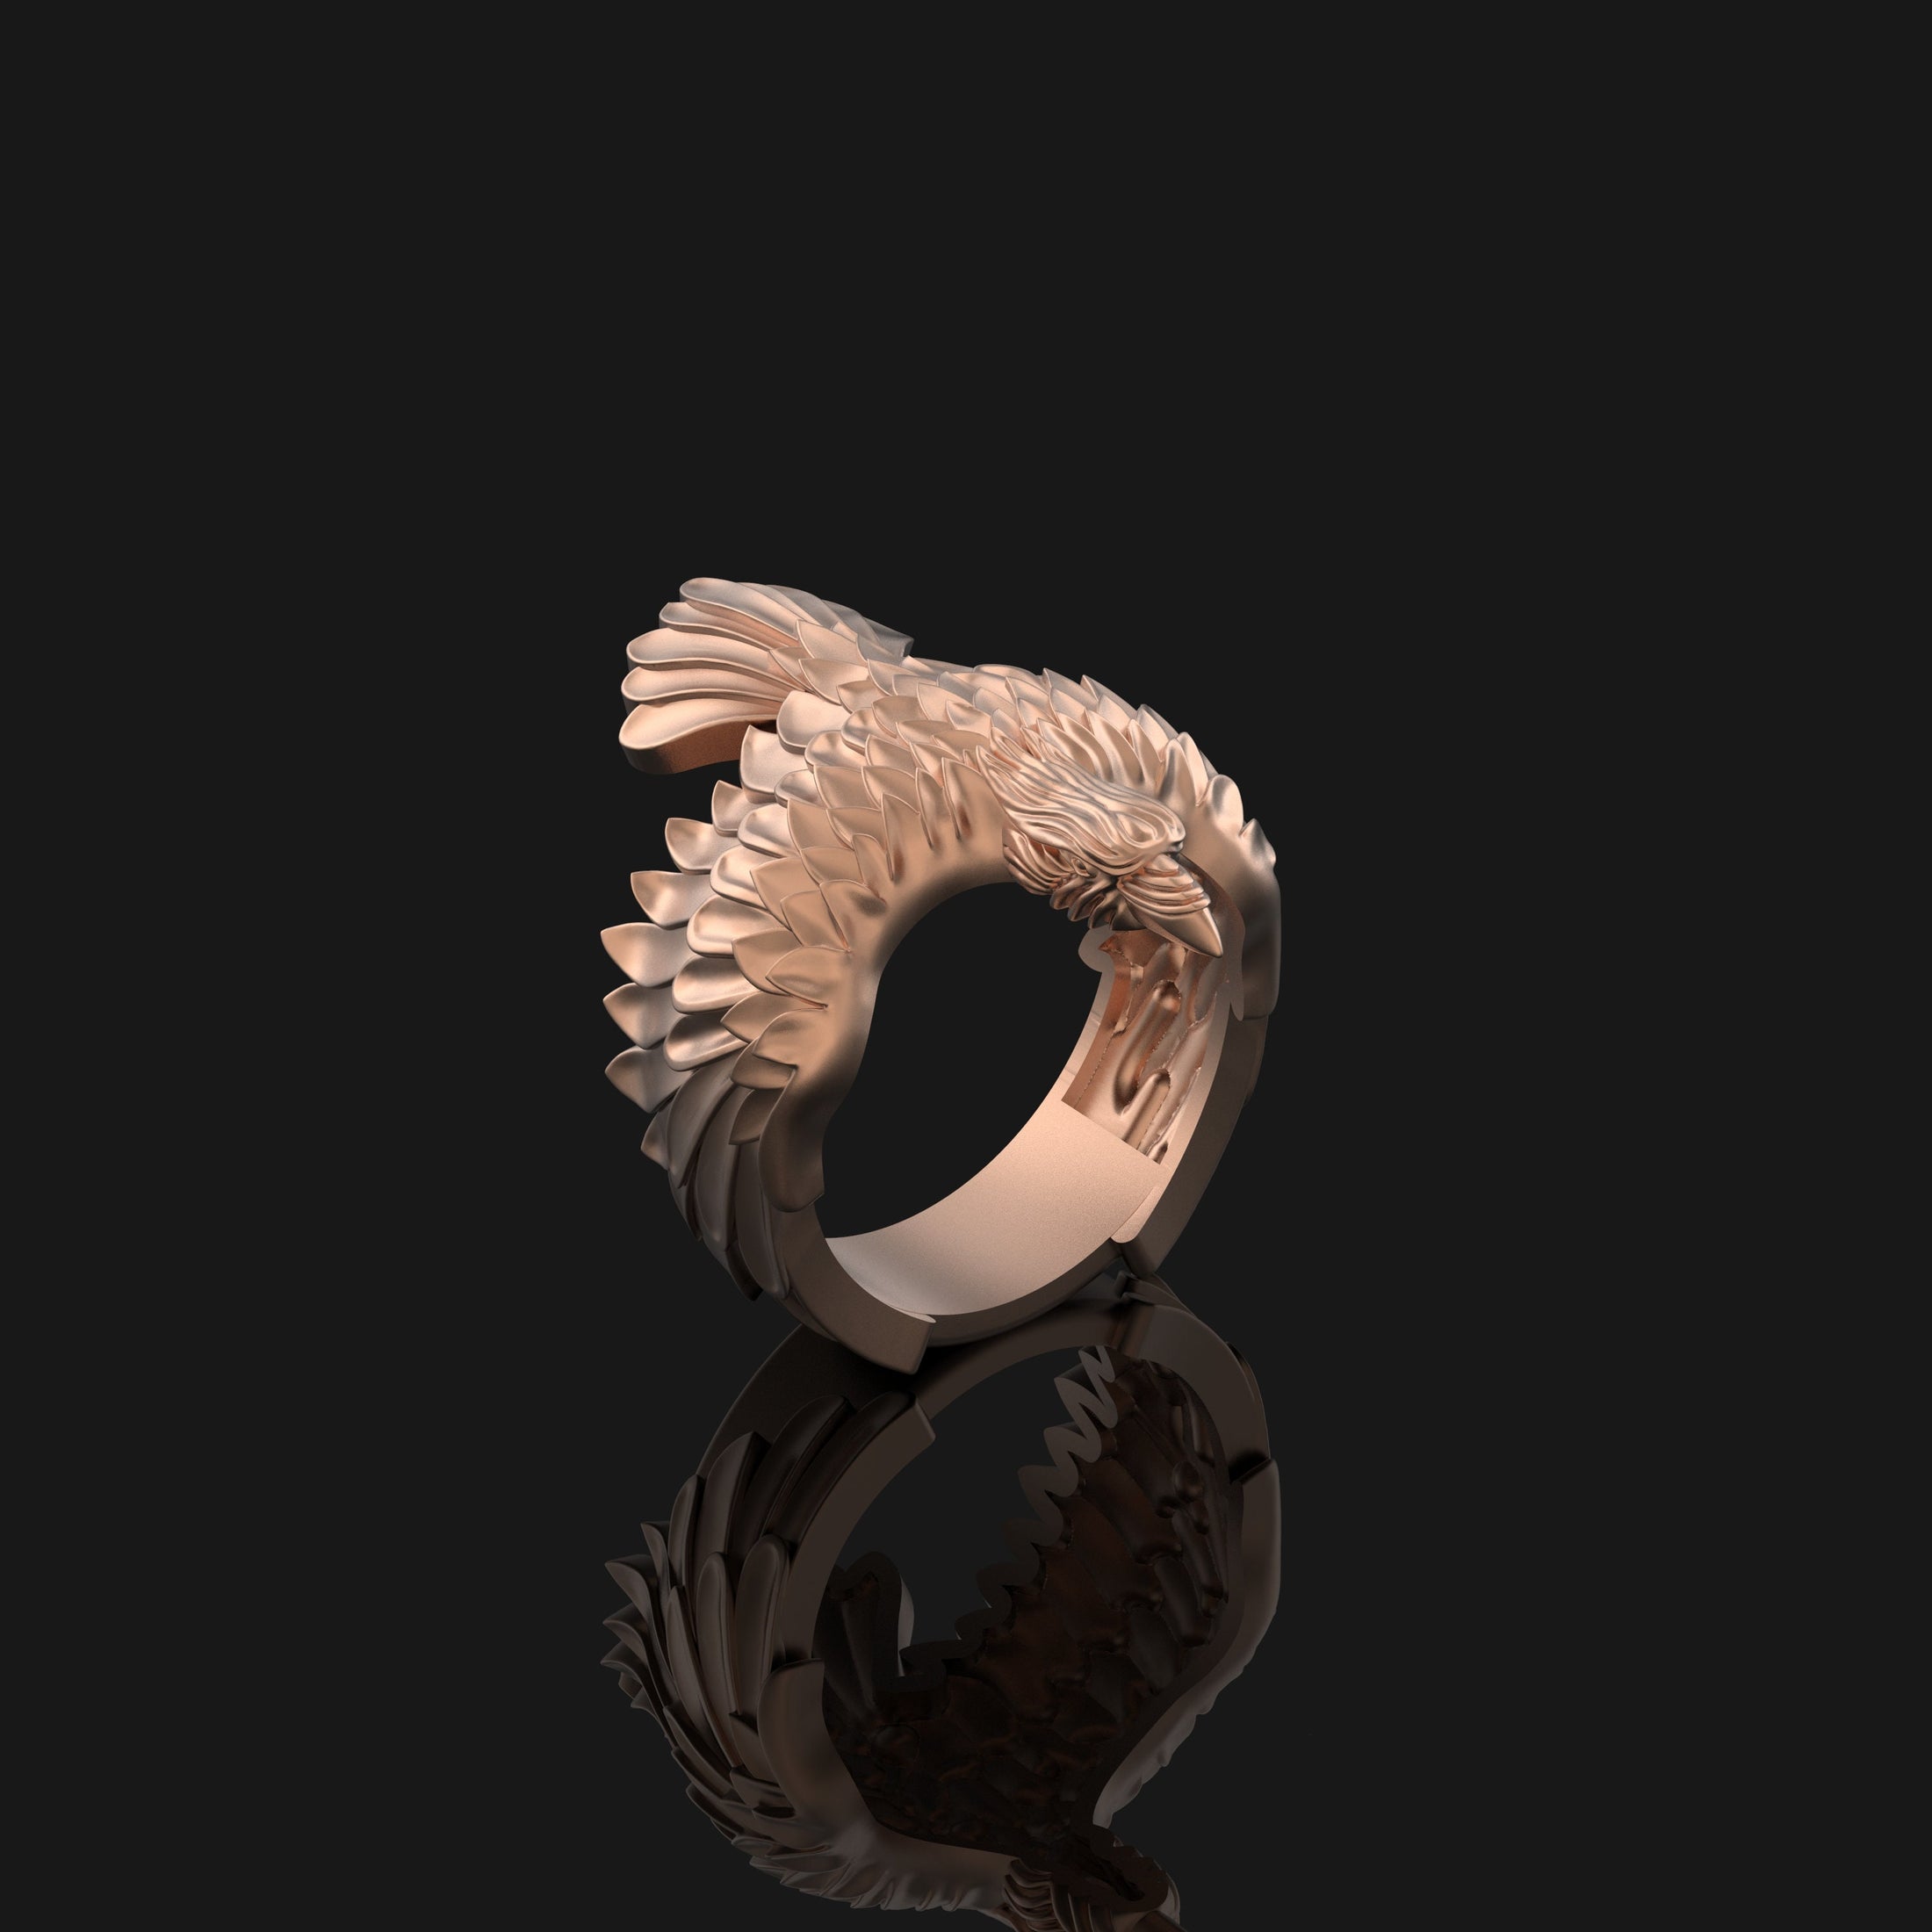 Silver Eagle Ring - Majestic Bird of Prey Jewelry, Patriotic Symbol Ring, Elegant Men's Gift